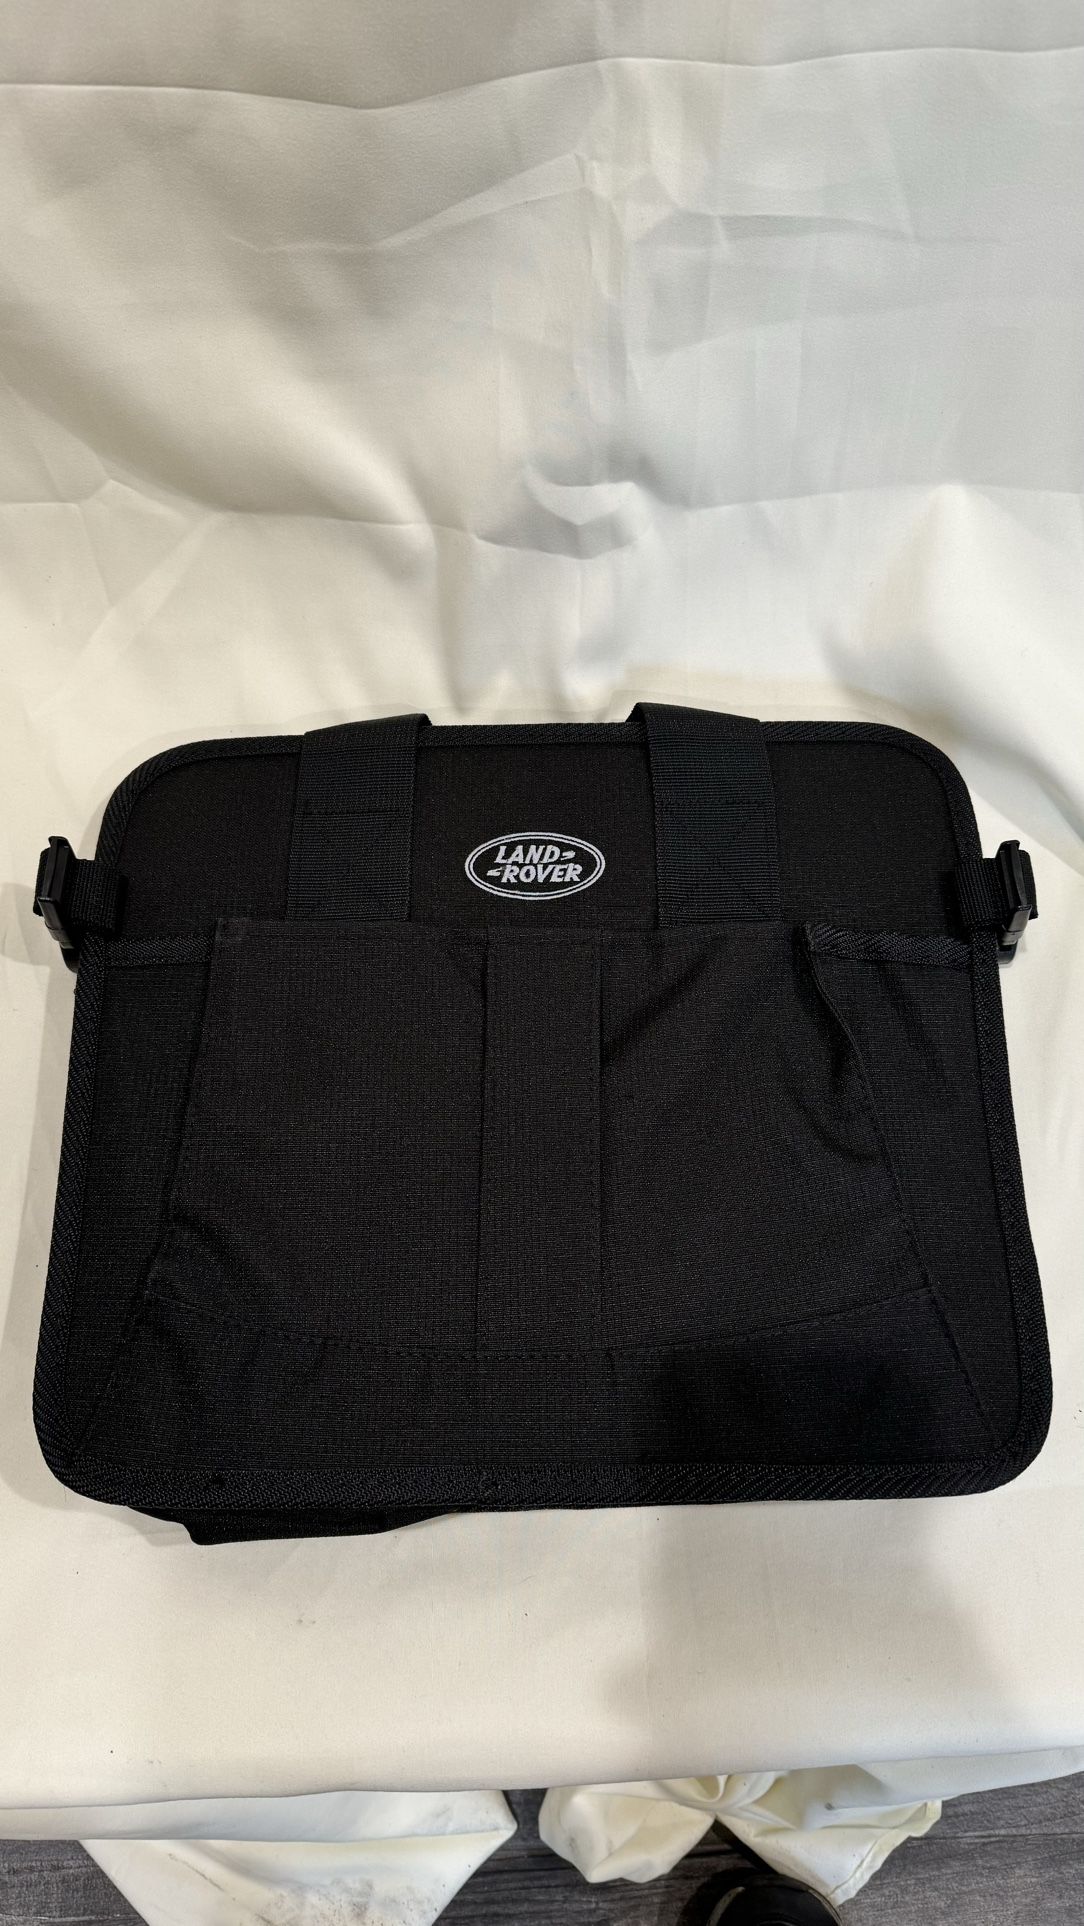 Genuine  Bag For Land Rover Driver, Document Holder, Bag 